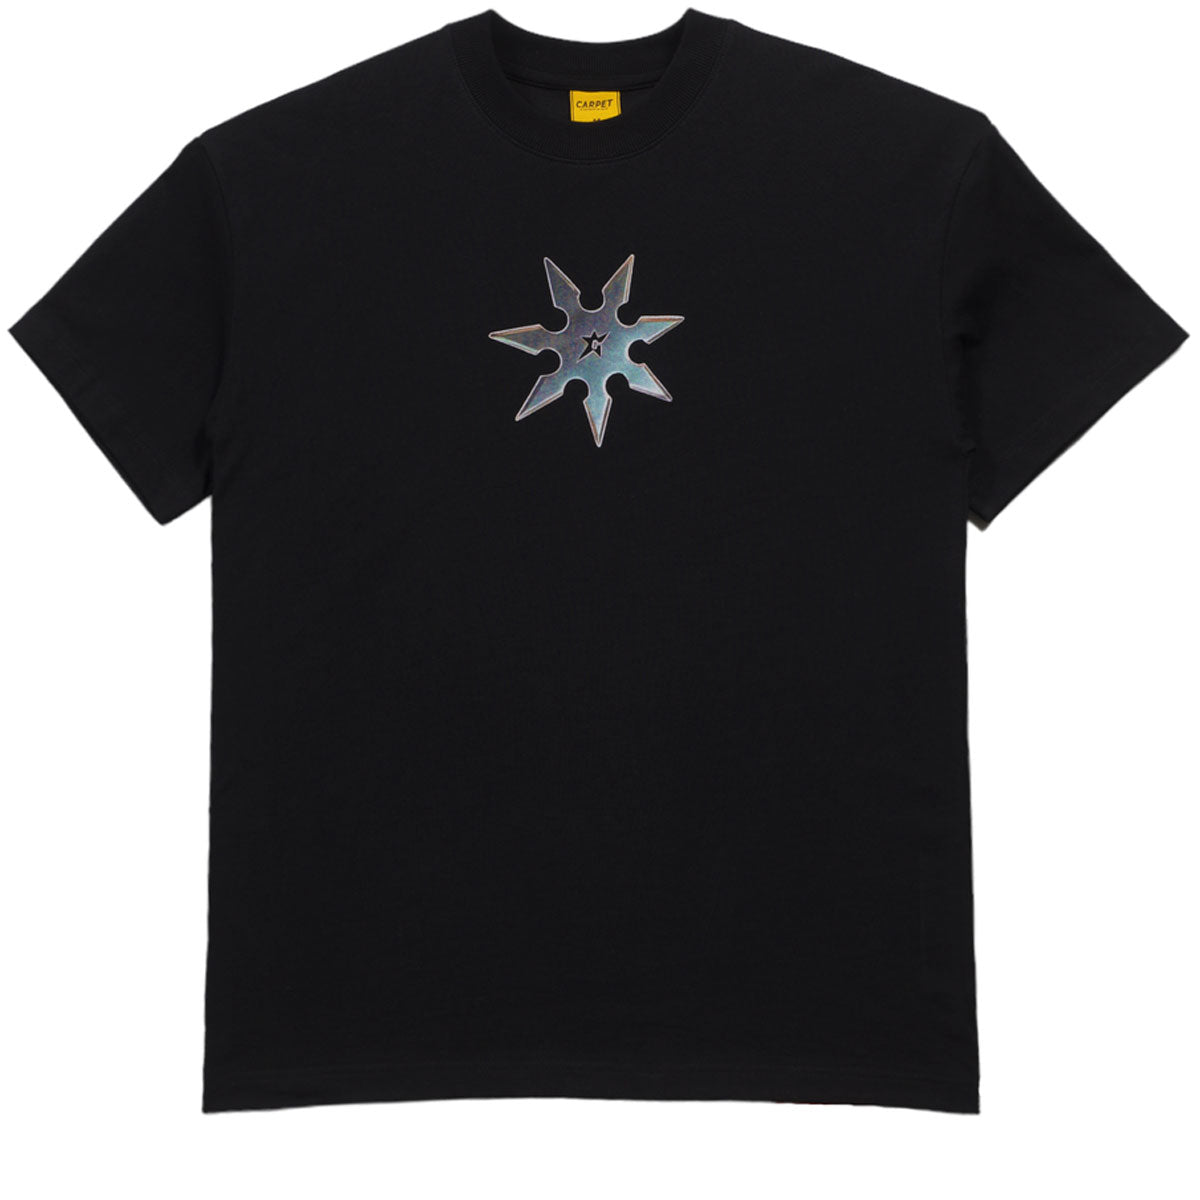 Carpet Company Throwing Star T-Shirt - Black image 1